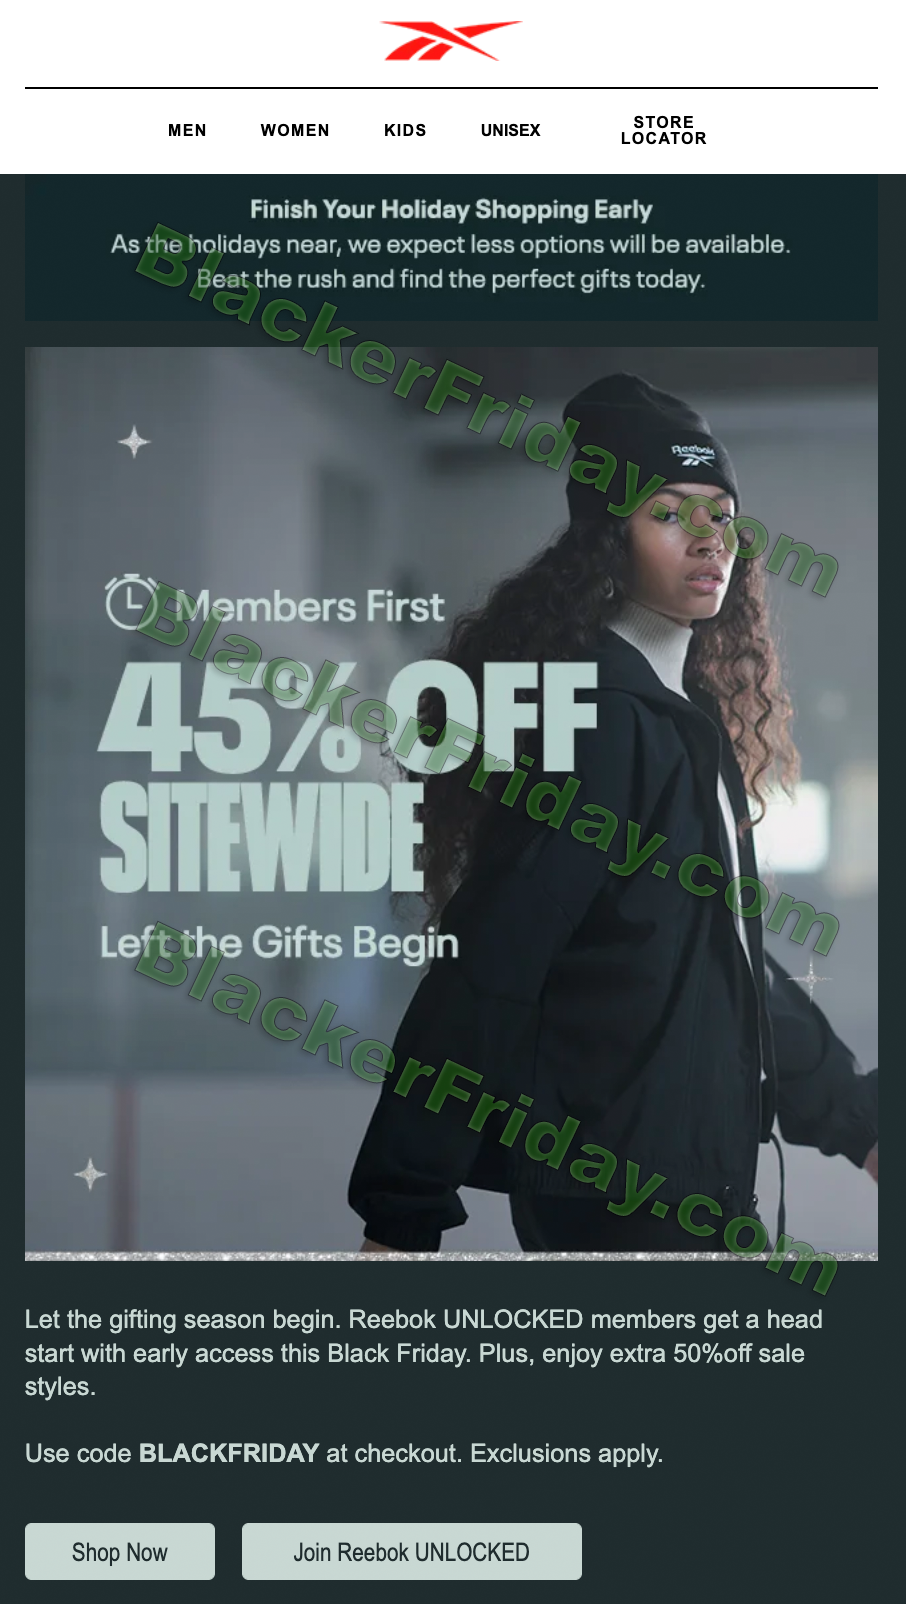 Does Reebok Have Online Black Friday Sales?